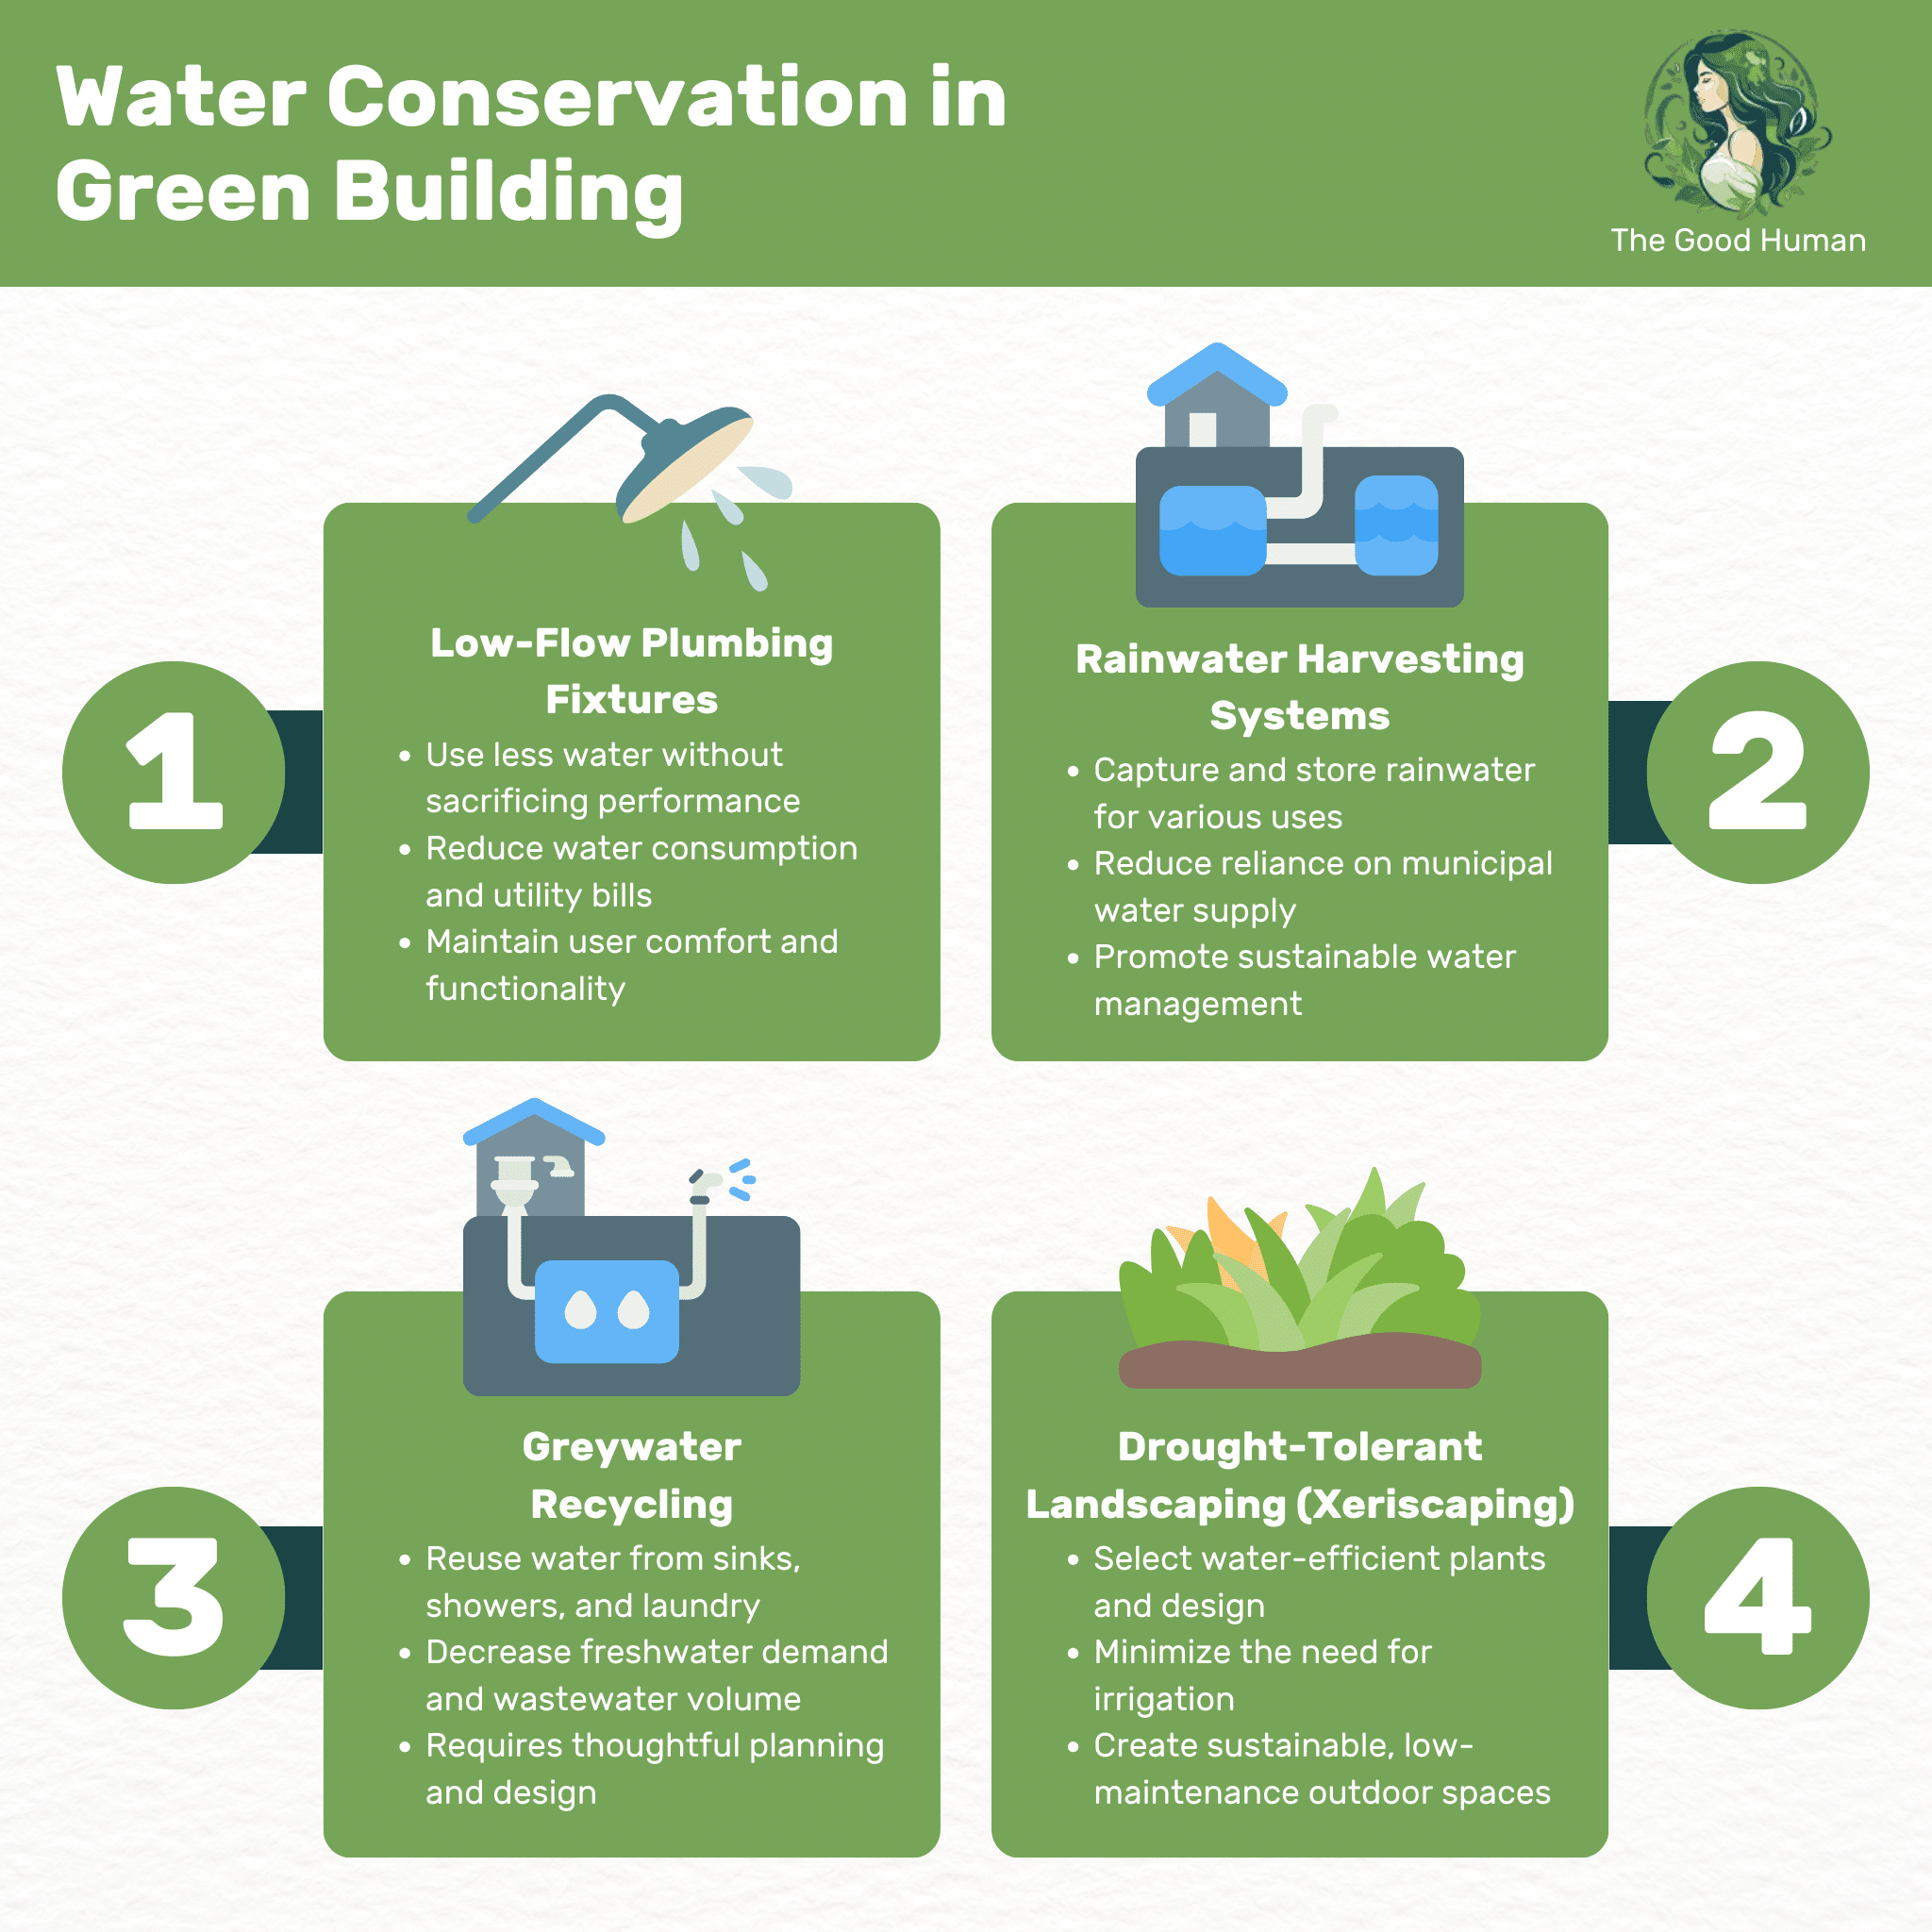 Green building water conservation methods